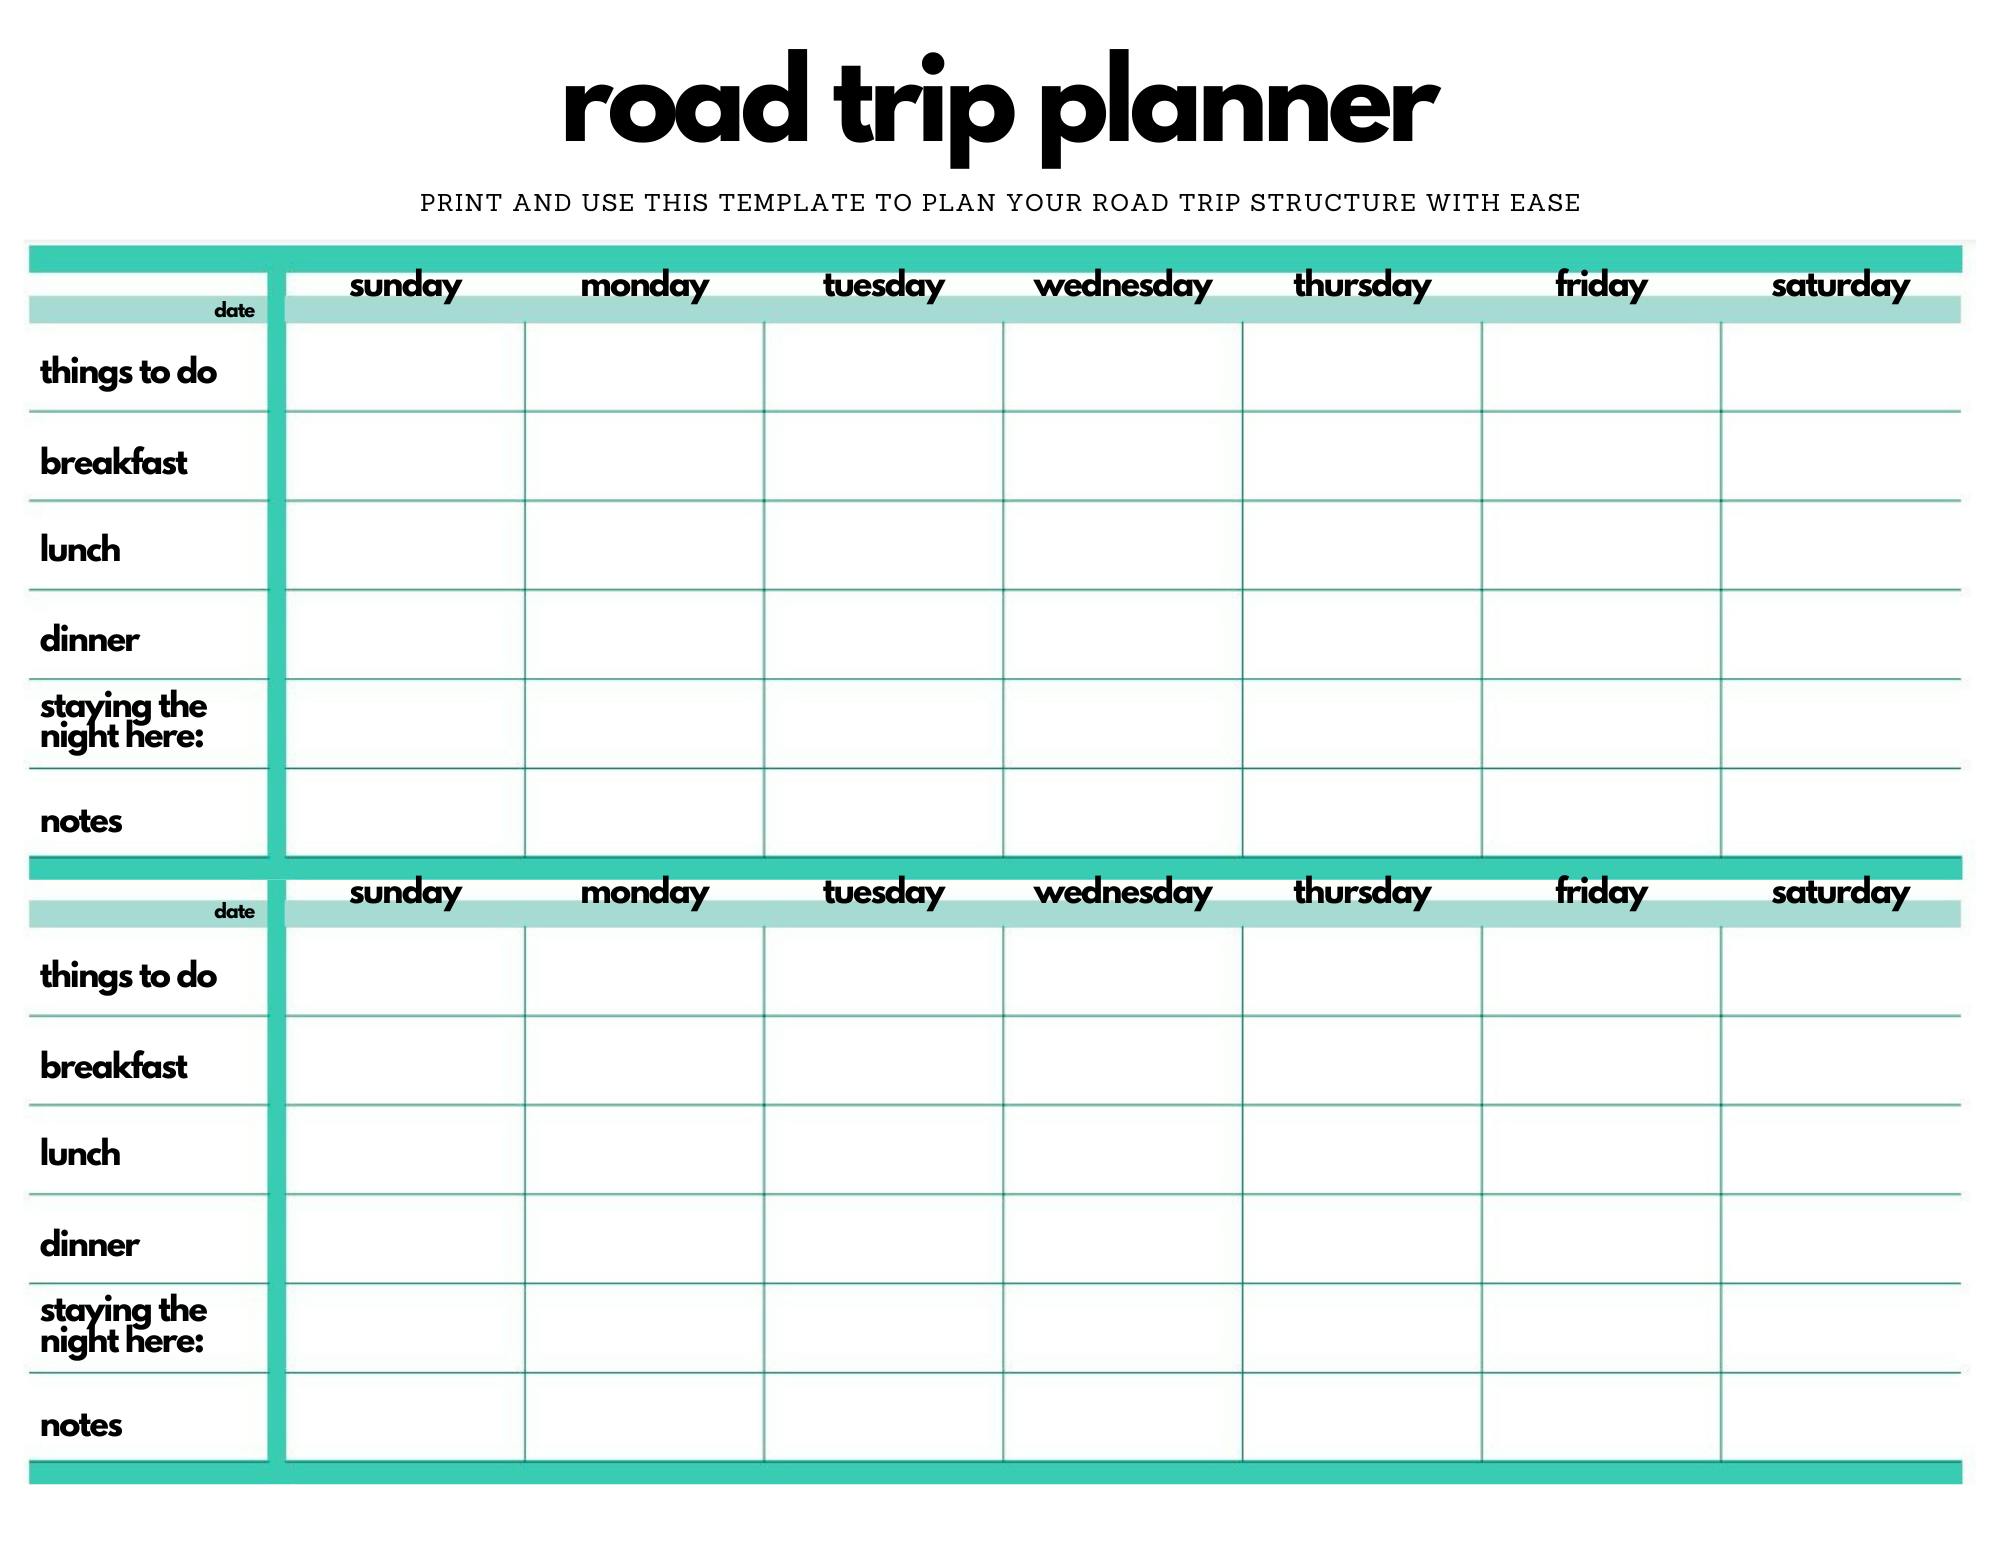 planning your trip schedule